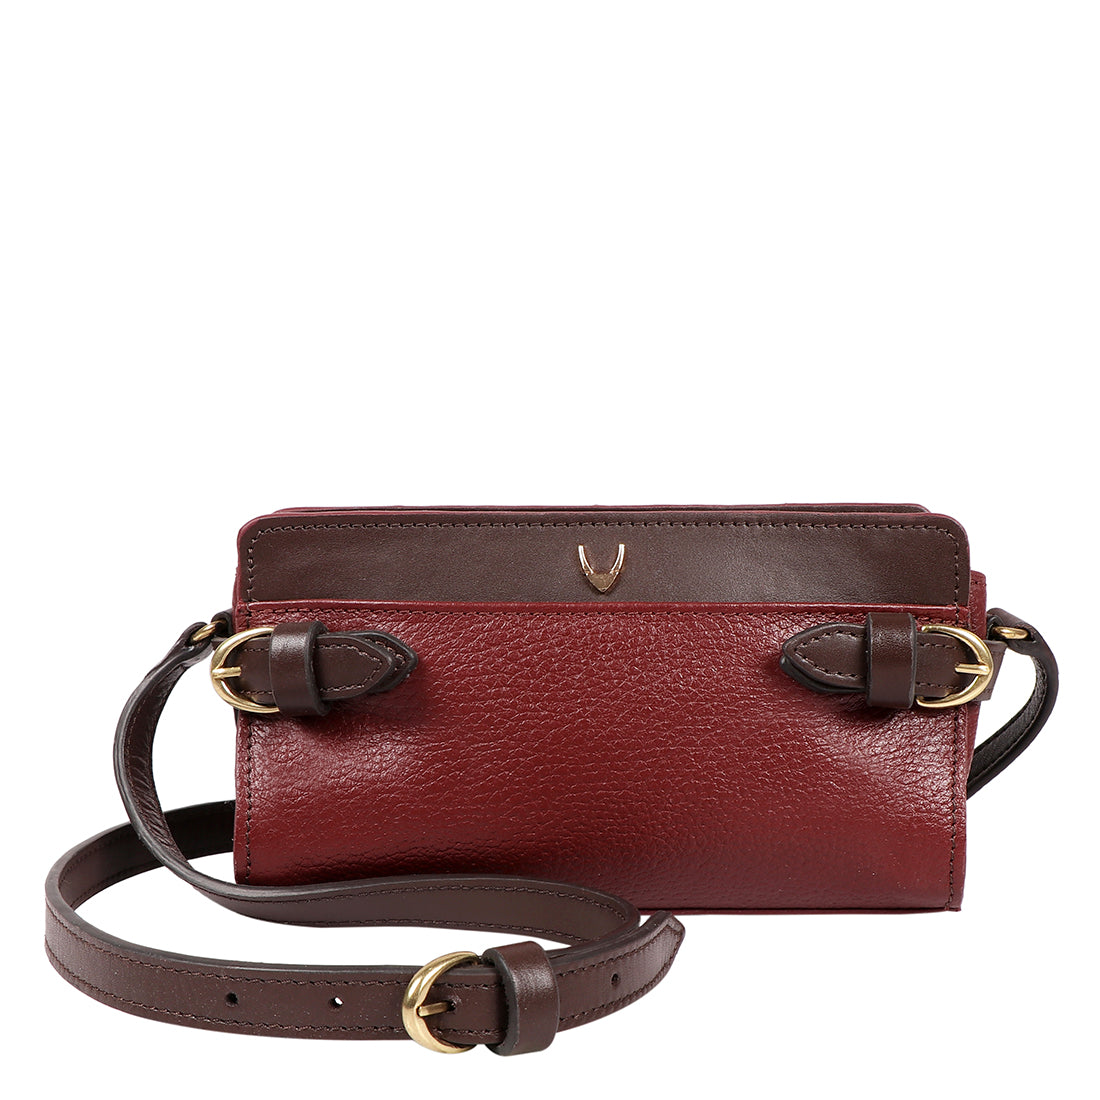 Buy Marsala Fiona 03 Sling Bag Online - Hidesign